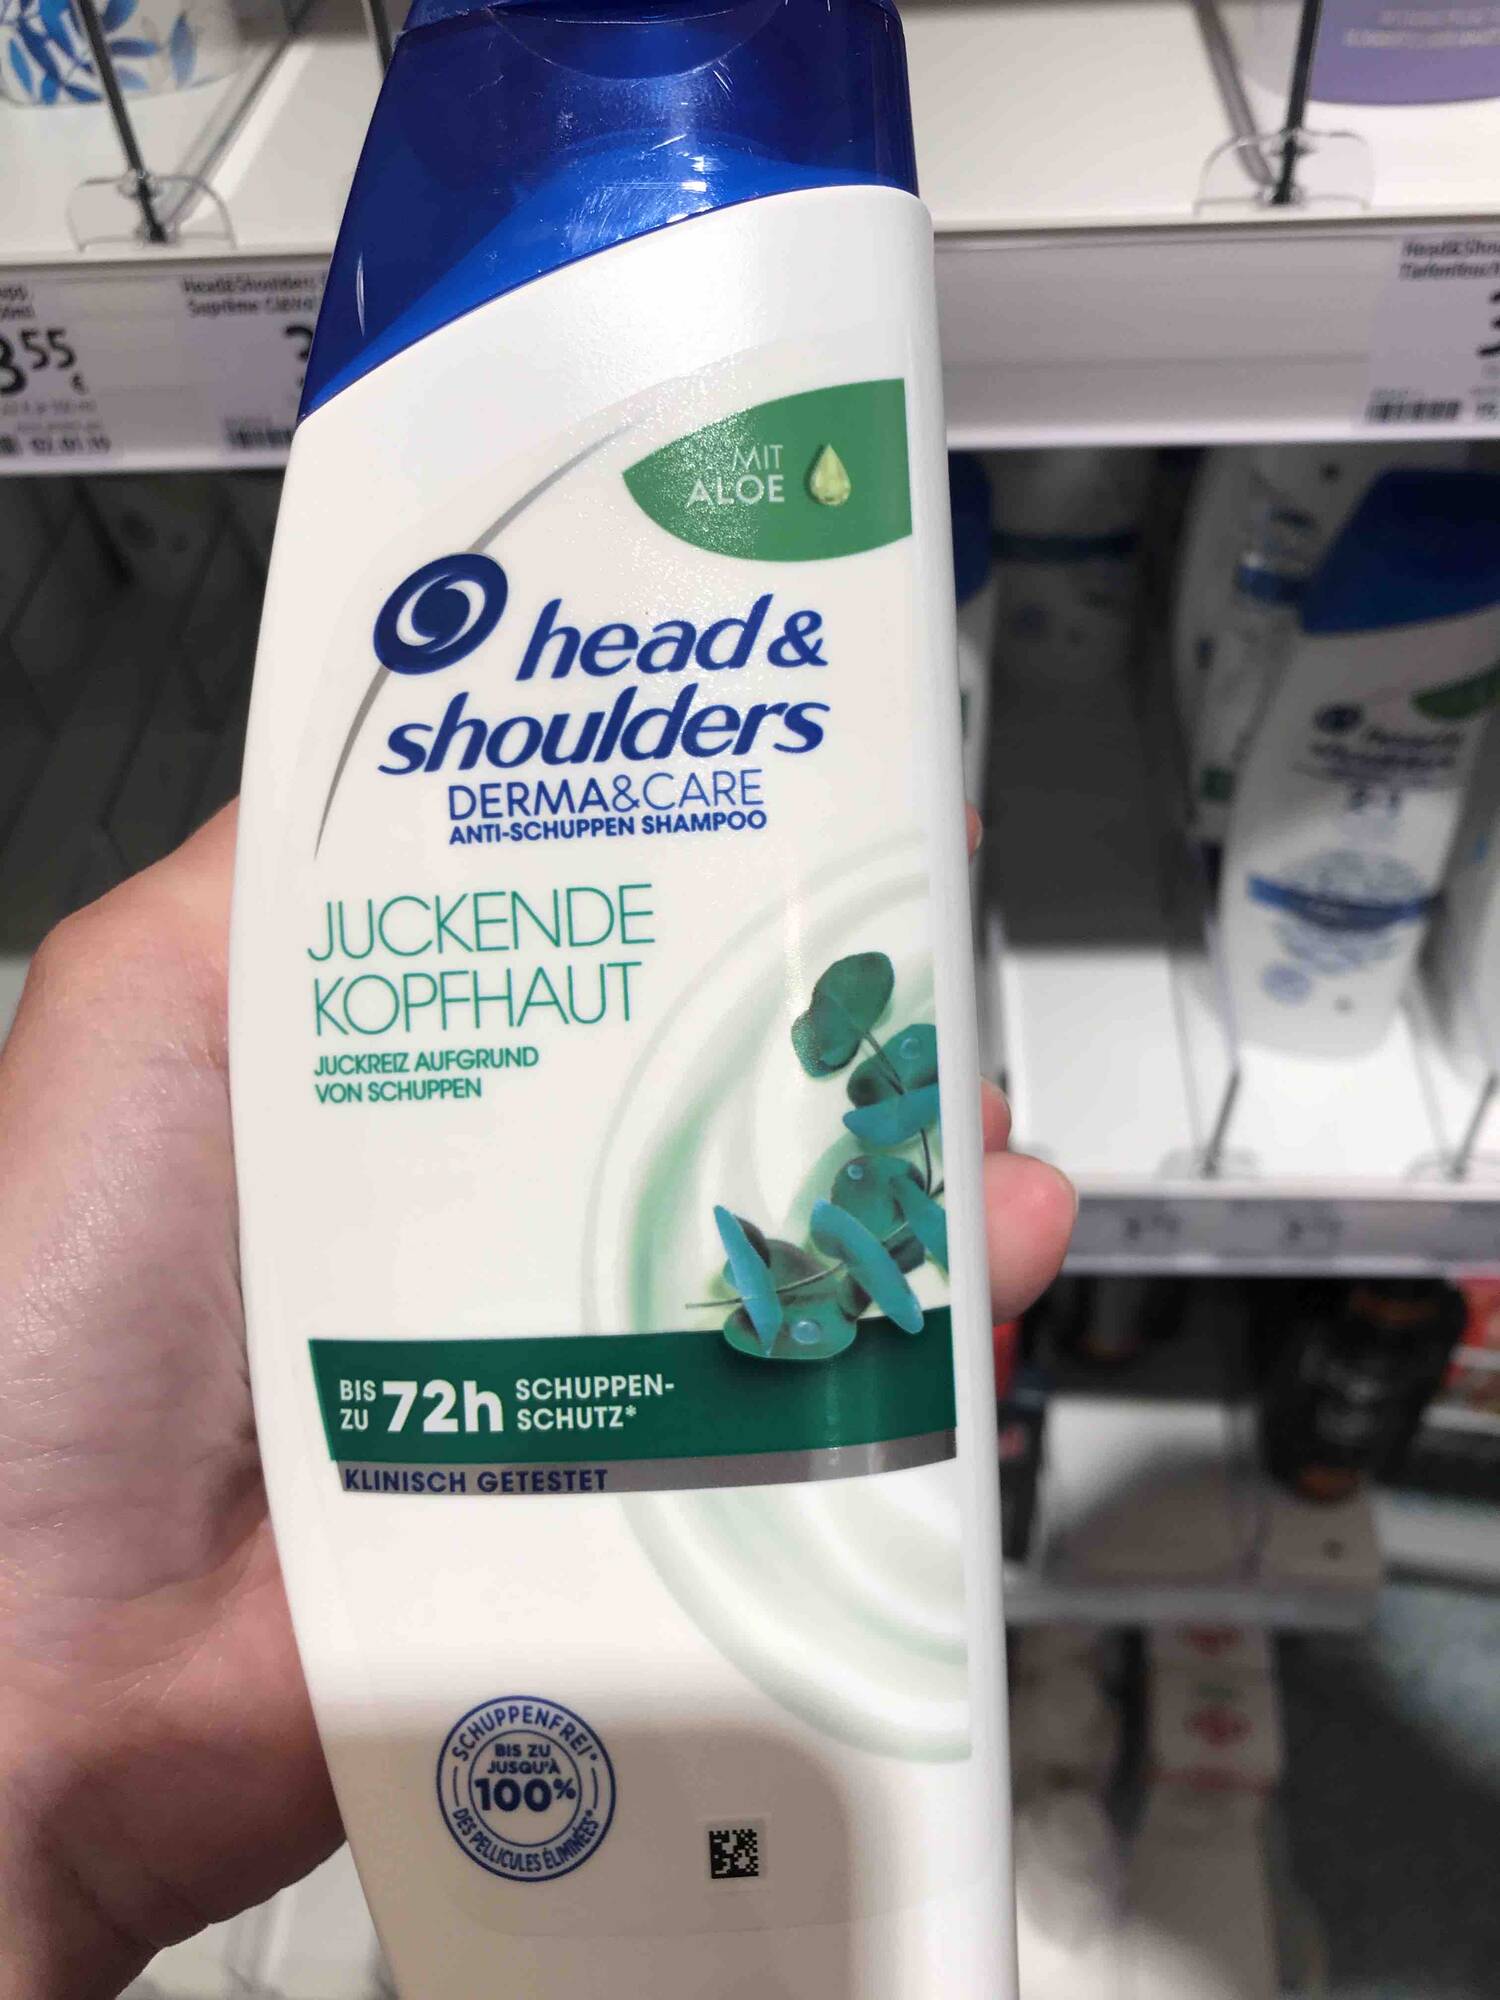 HEAD & SHOULDERS - Juckende kopfhaut - Anti-schuppen shampoo 72h